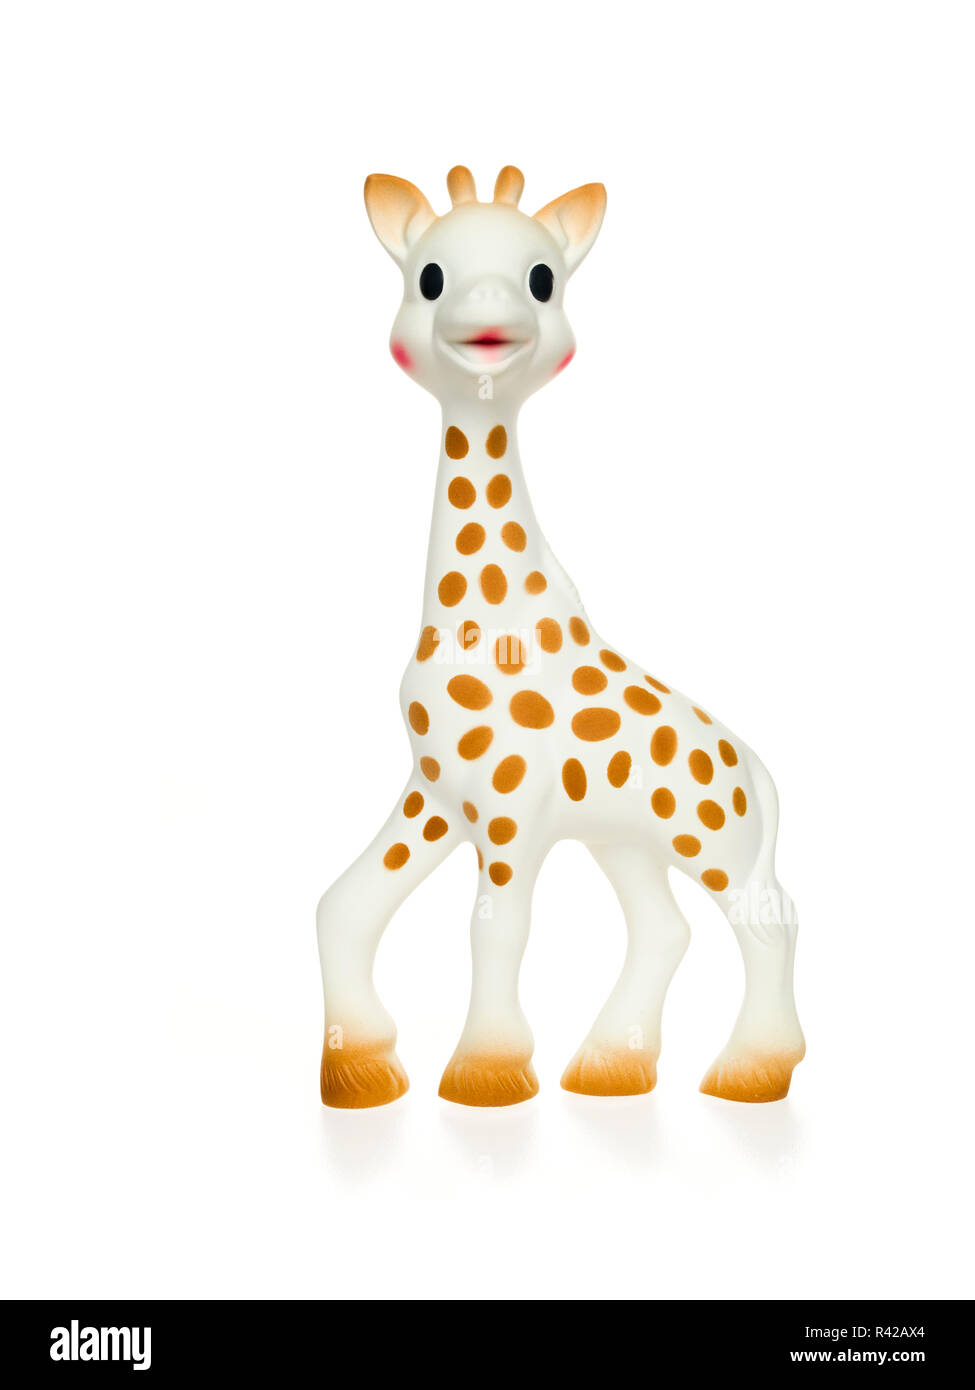 https://c8.alamy.com/comp/R42AX4/sophie-la-girafe-iconic-baby-toy-R42AX4.jpg